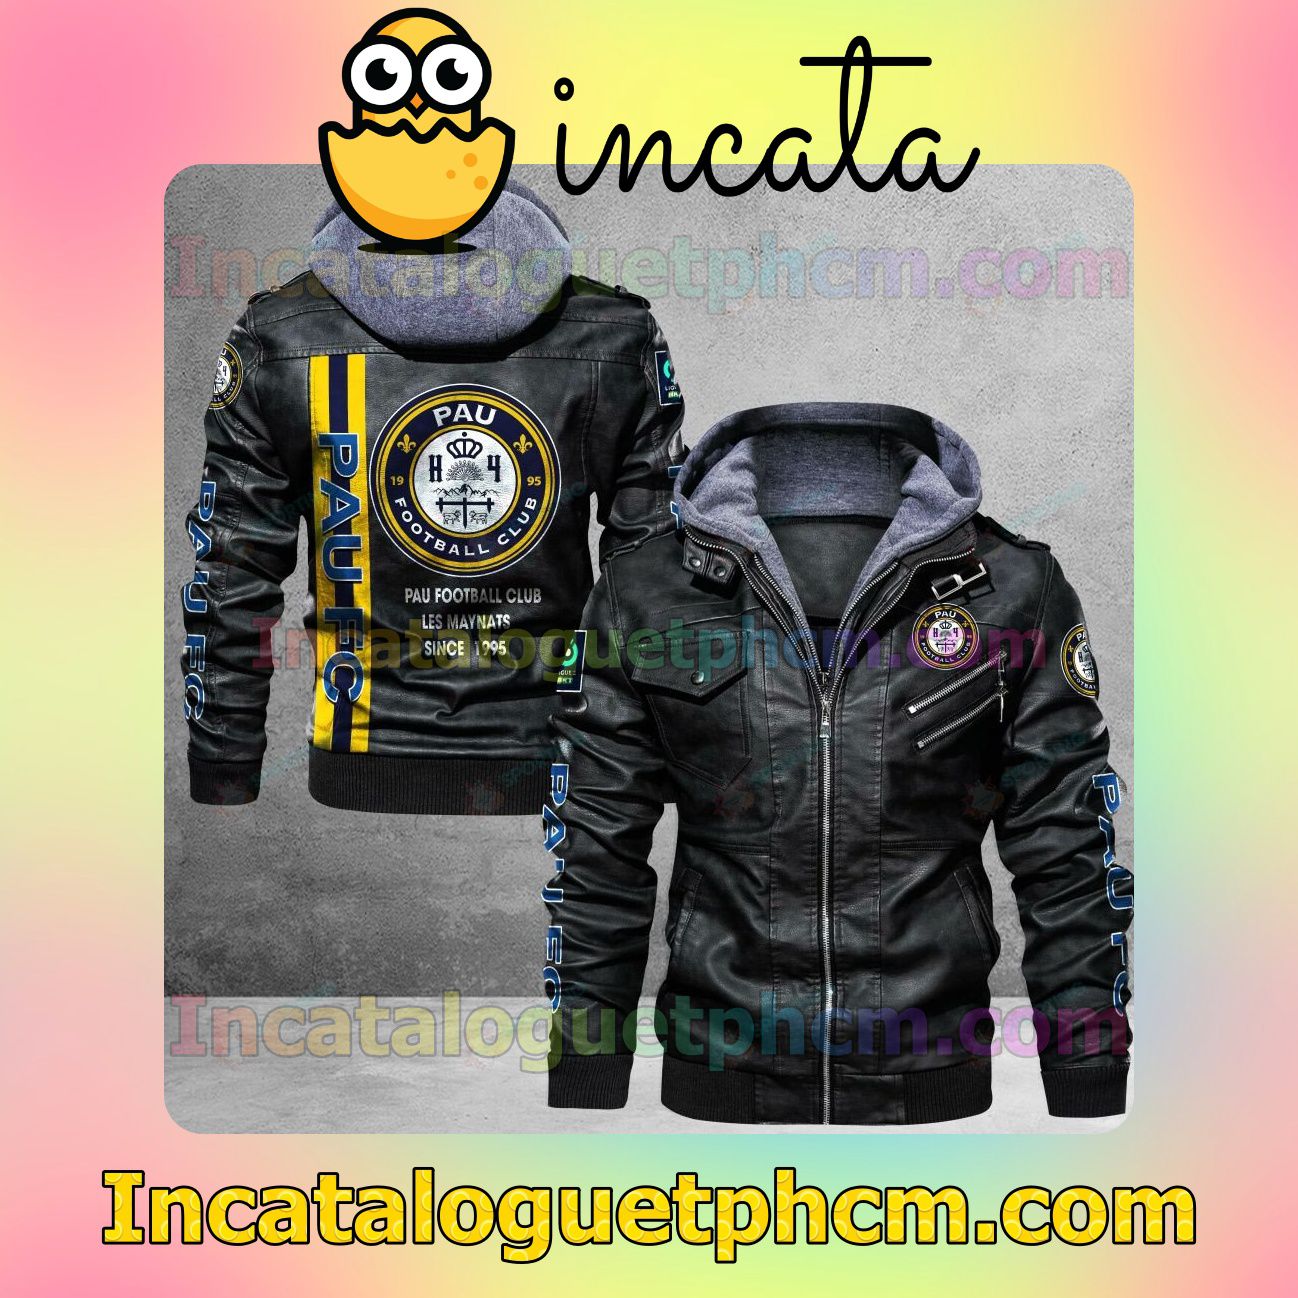 Pau Football Club Brand Uniform Leather Jacket